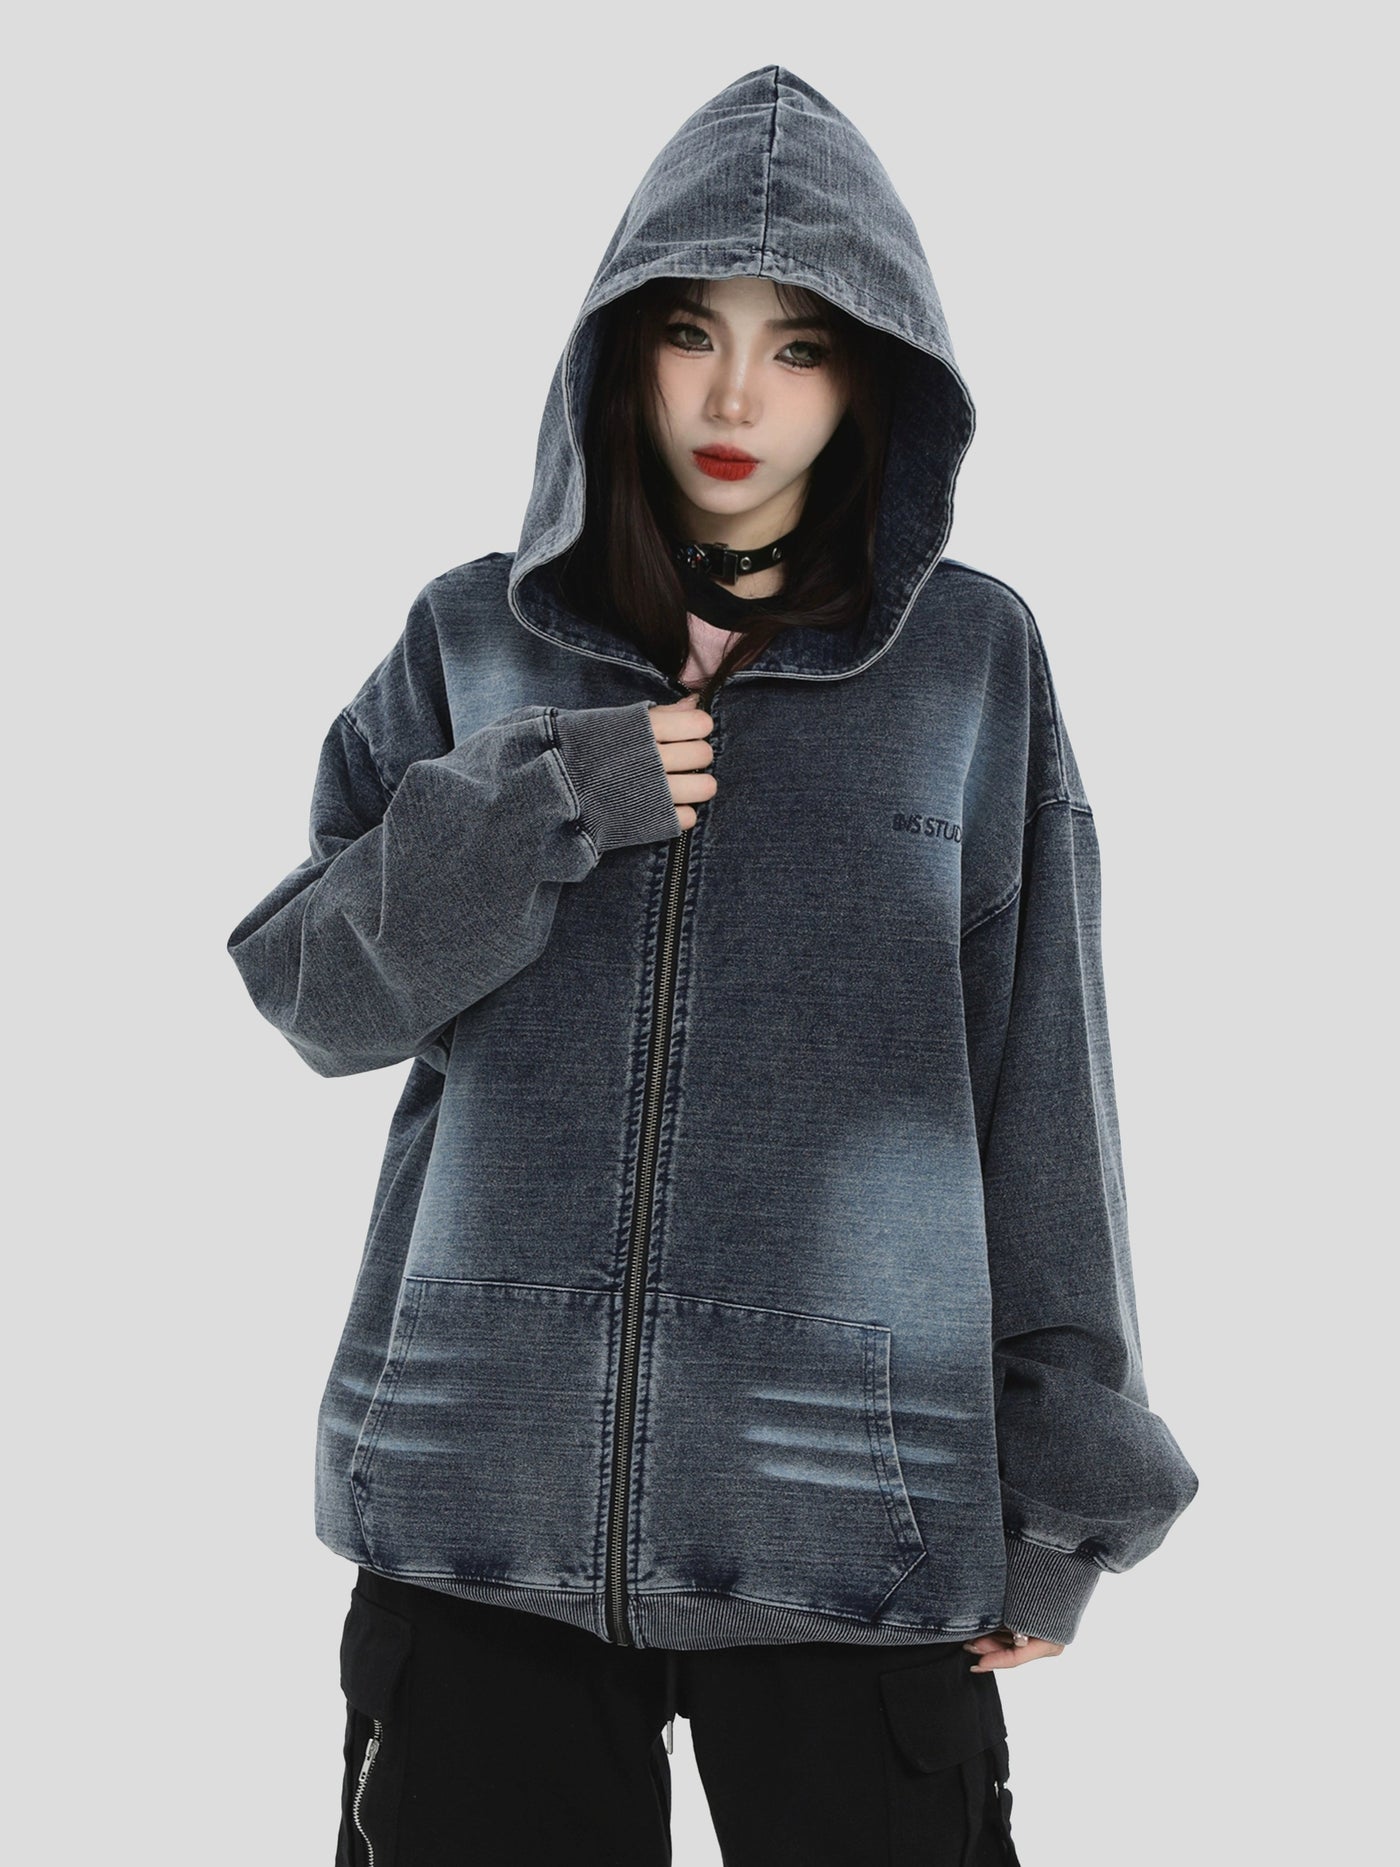 Fade Spots Denim Hoodie Korean Street Fashion Hoodie By INS Korea Shop Online at OH Vault